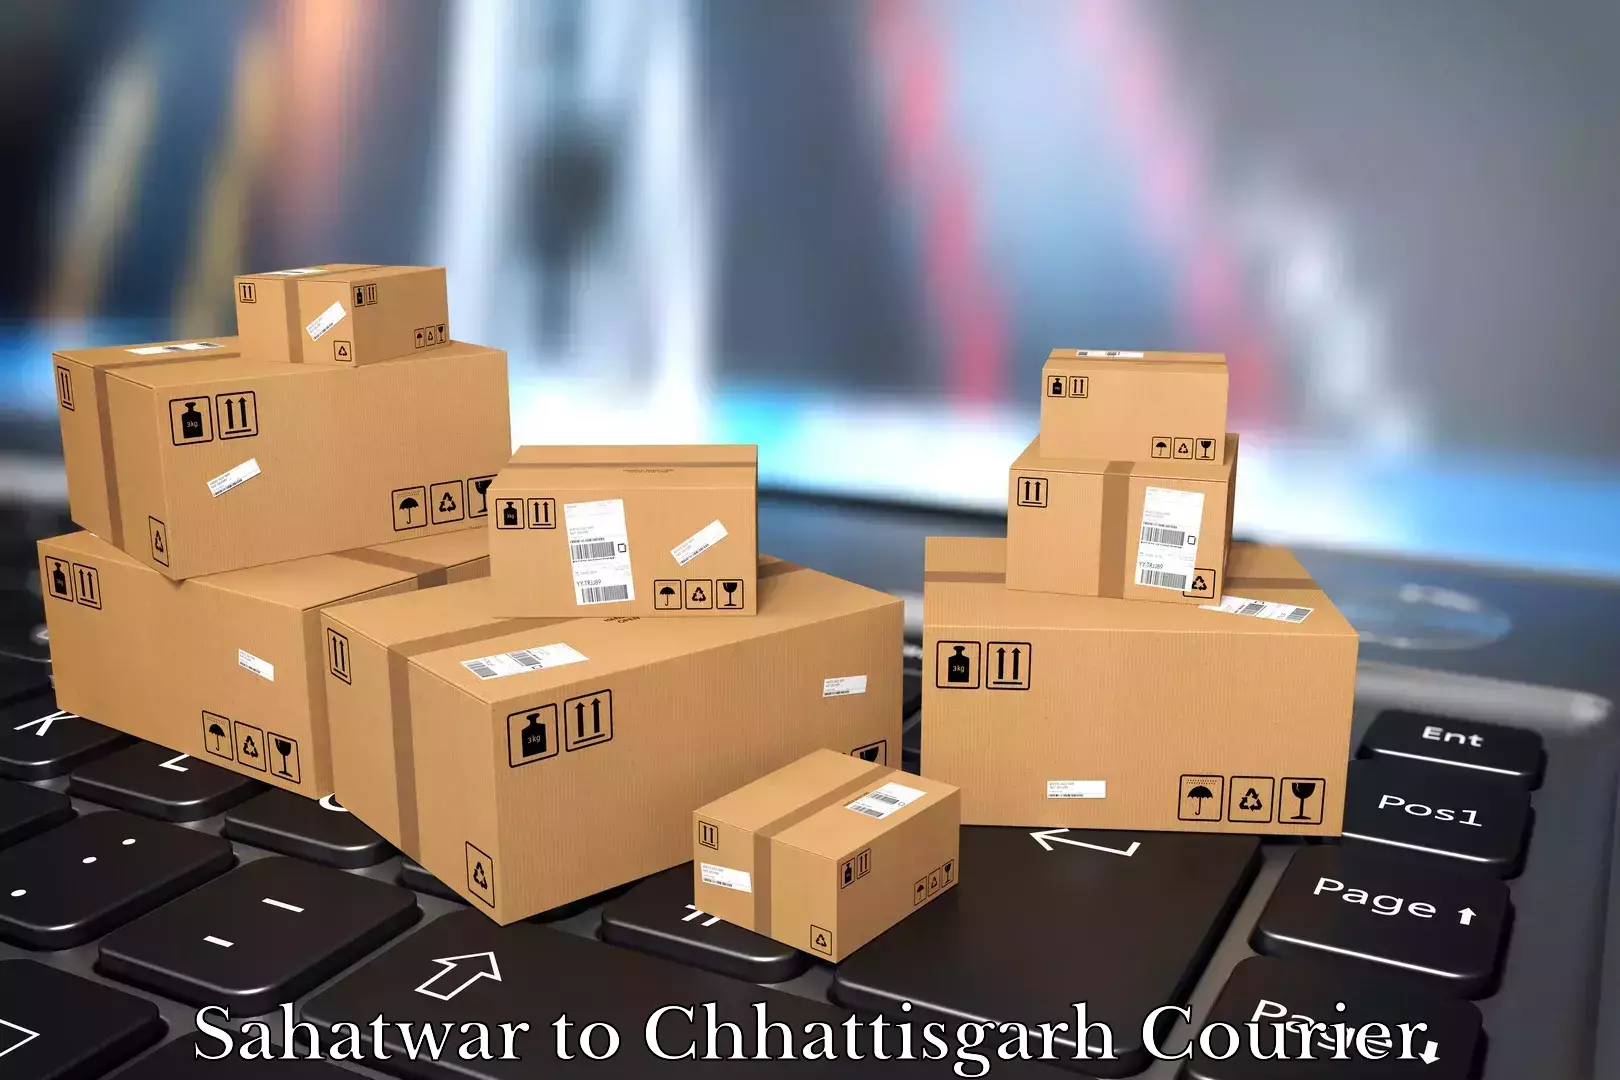 Professional moving company Sahatwar to Nagri